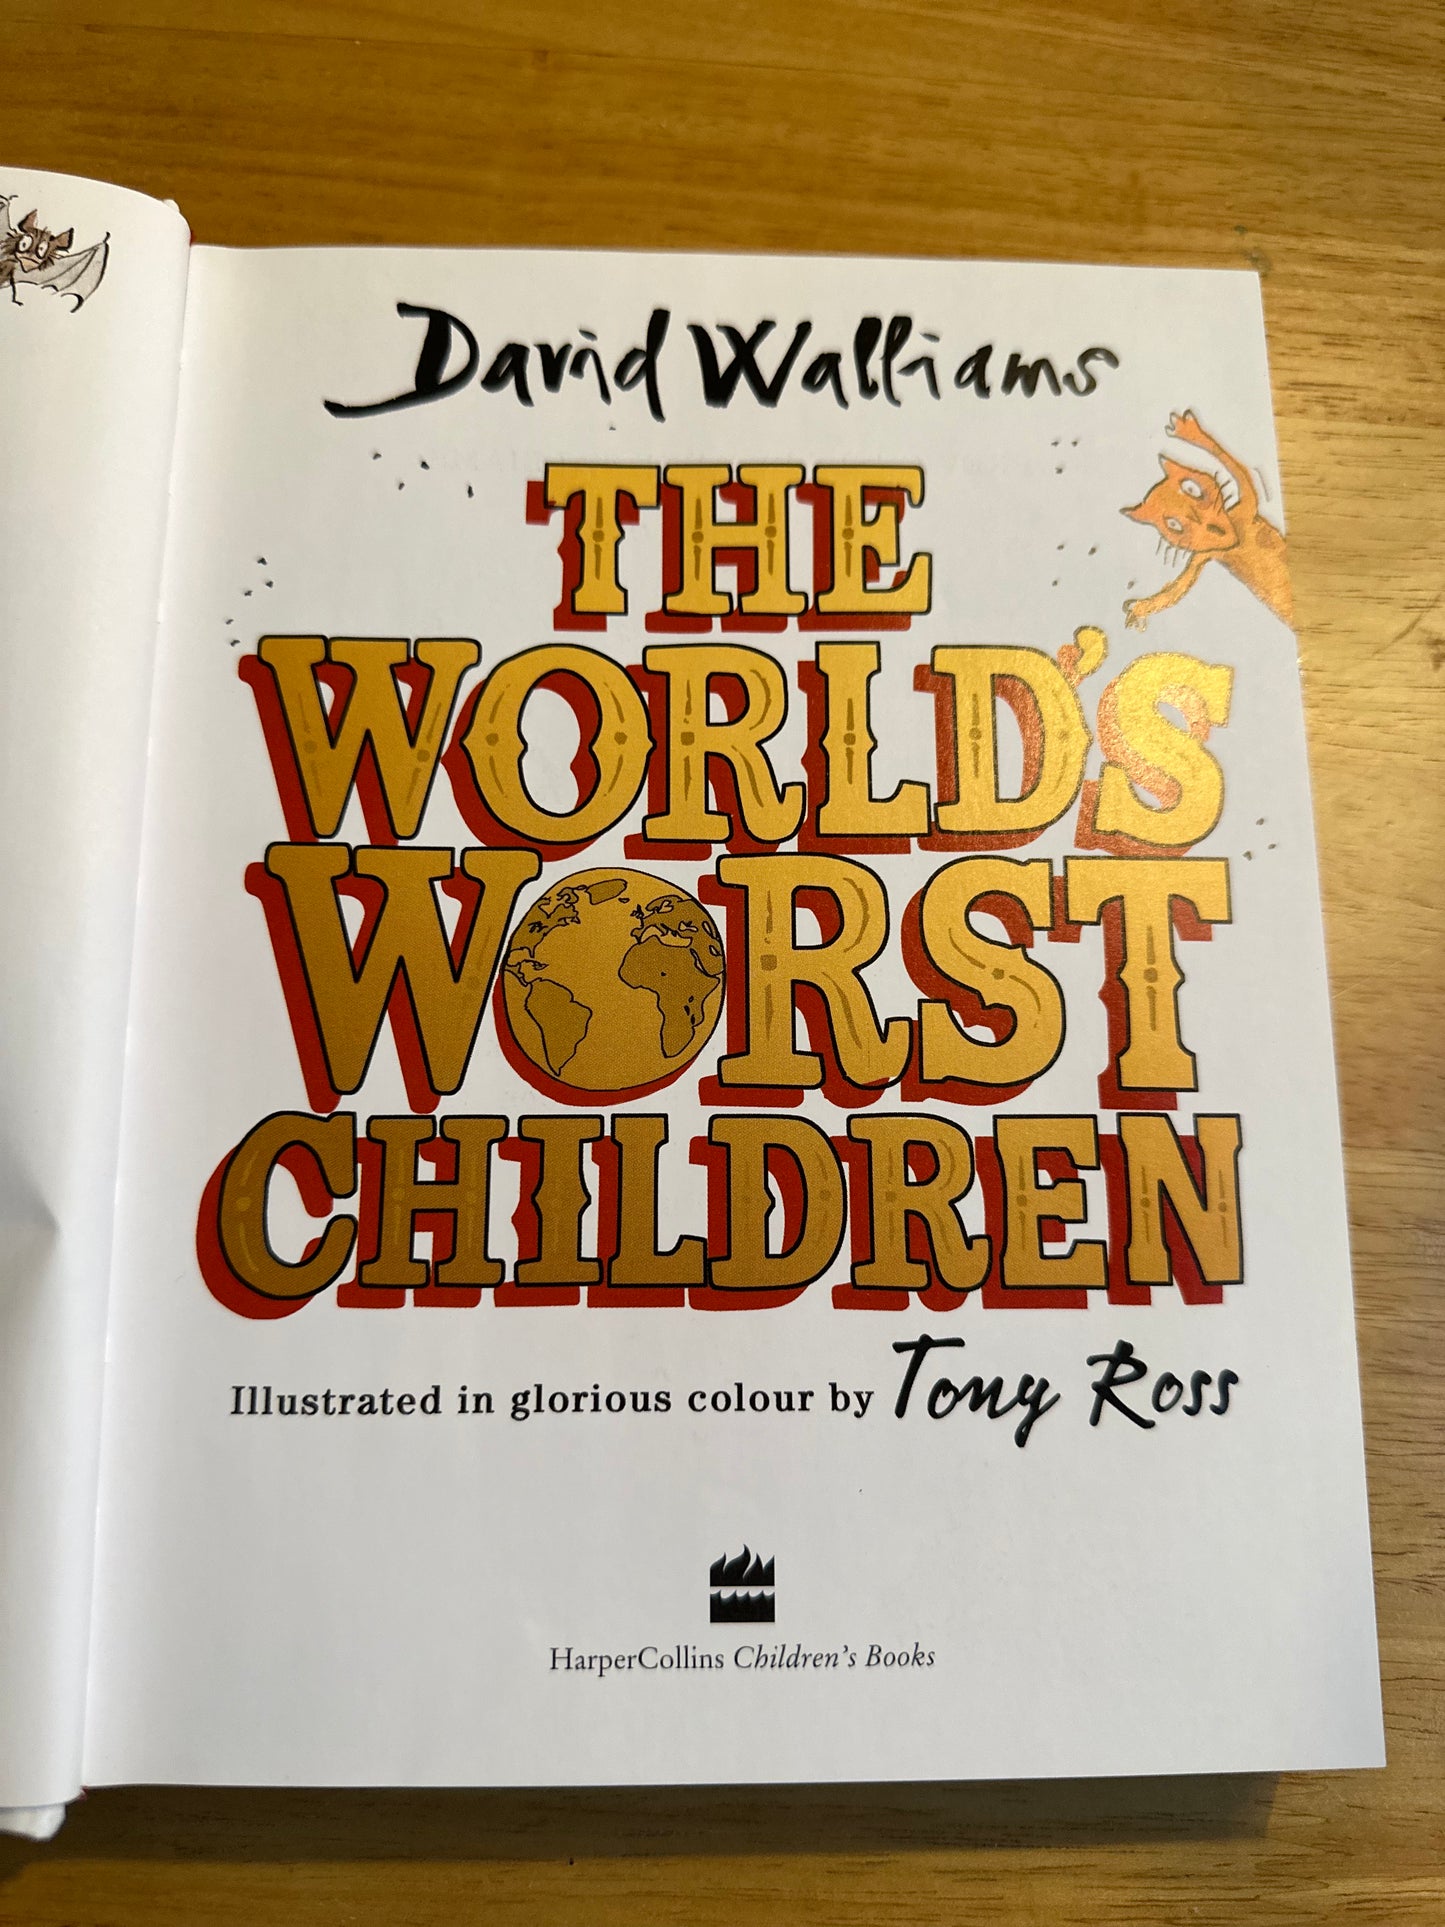 2016*1st* The World’s Worst Children - David Walliams(Tony Ross illustration) HarperCollins hardback good jacket